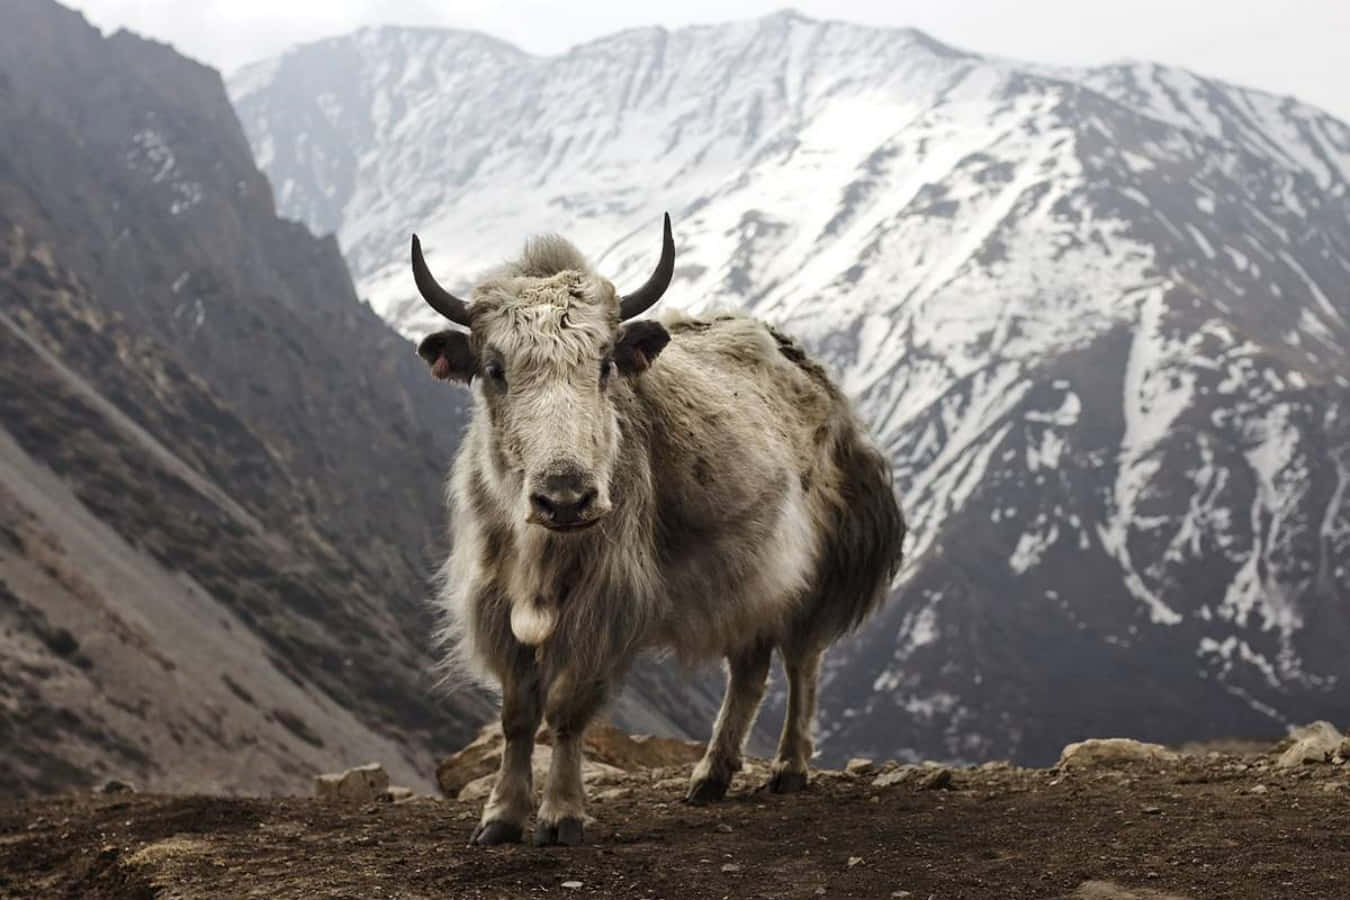 A herd of majestic yaks roam the Himalayas